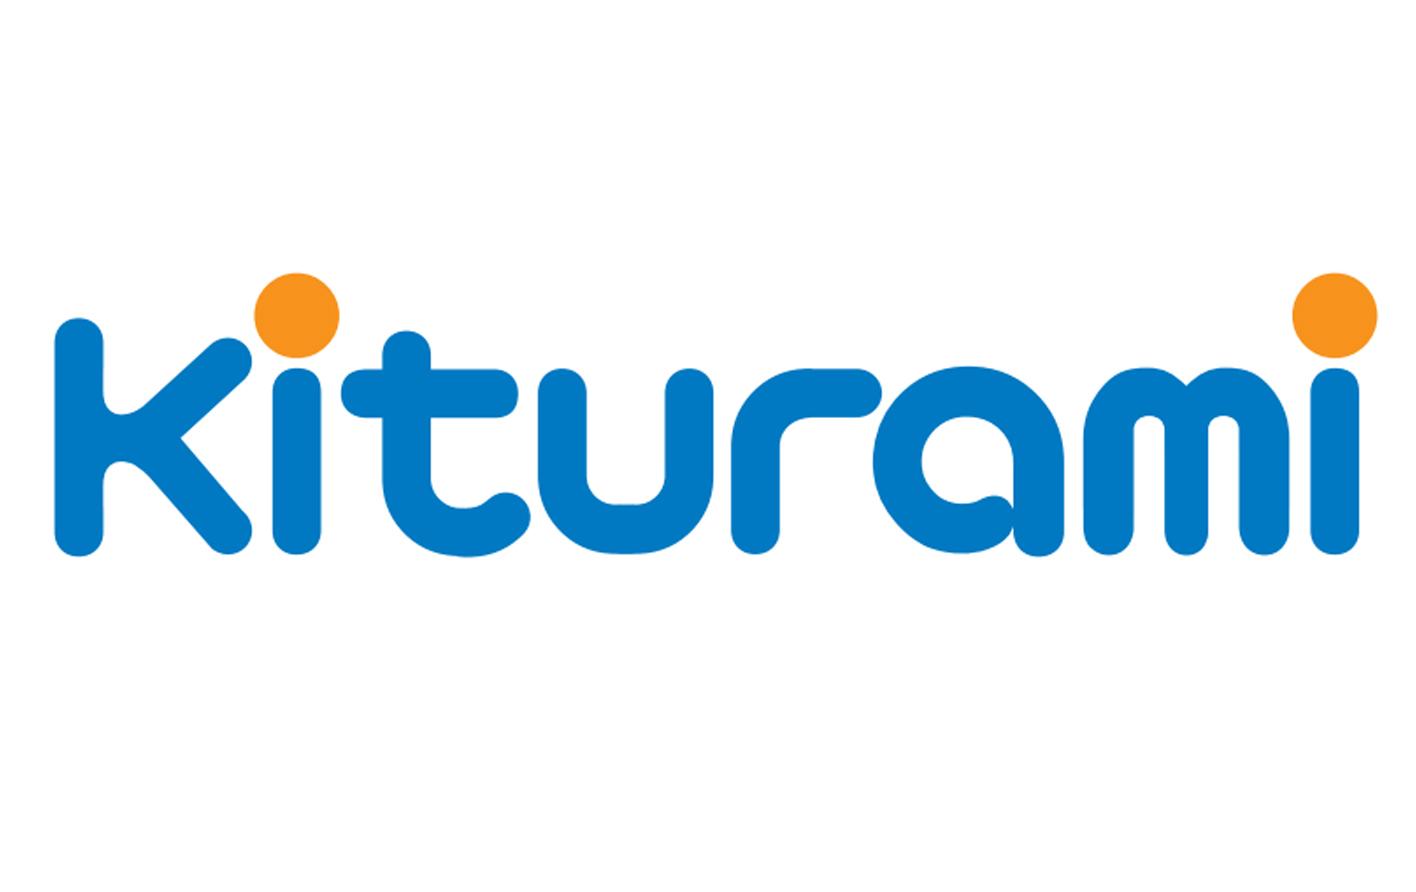 Kiturami world. Kiturami лого. Логотип Kiturami котлы. Логотип газовых котлов Китурами. Бренды котлов отопления.